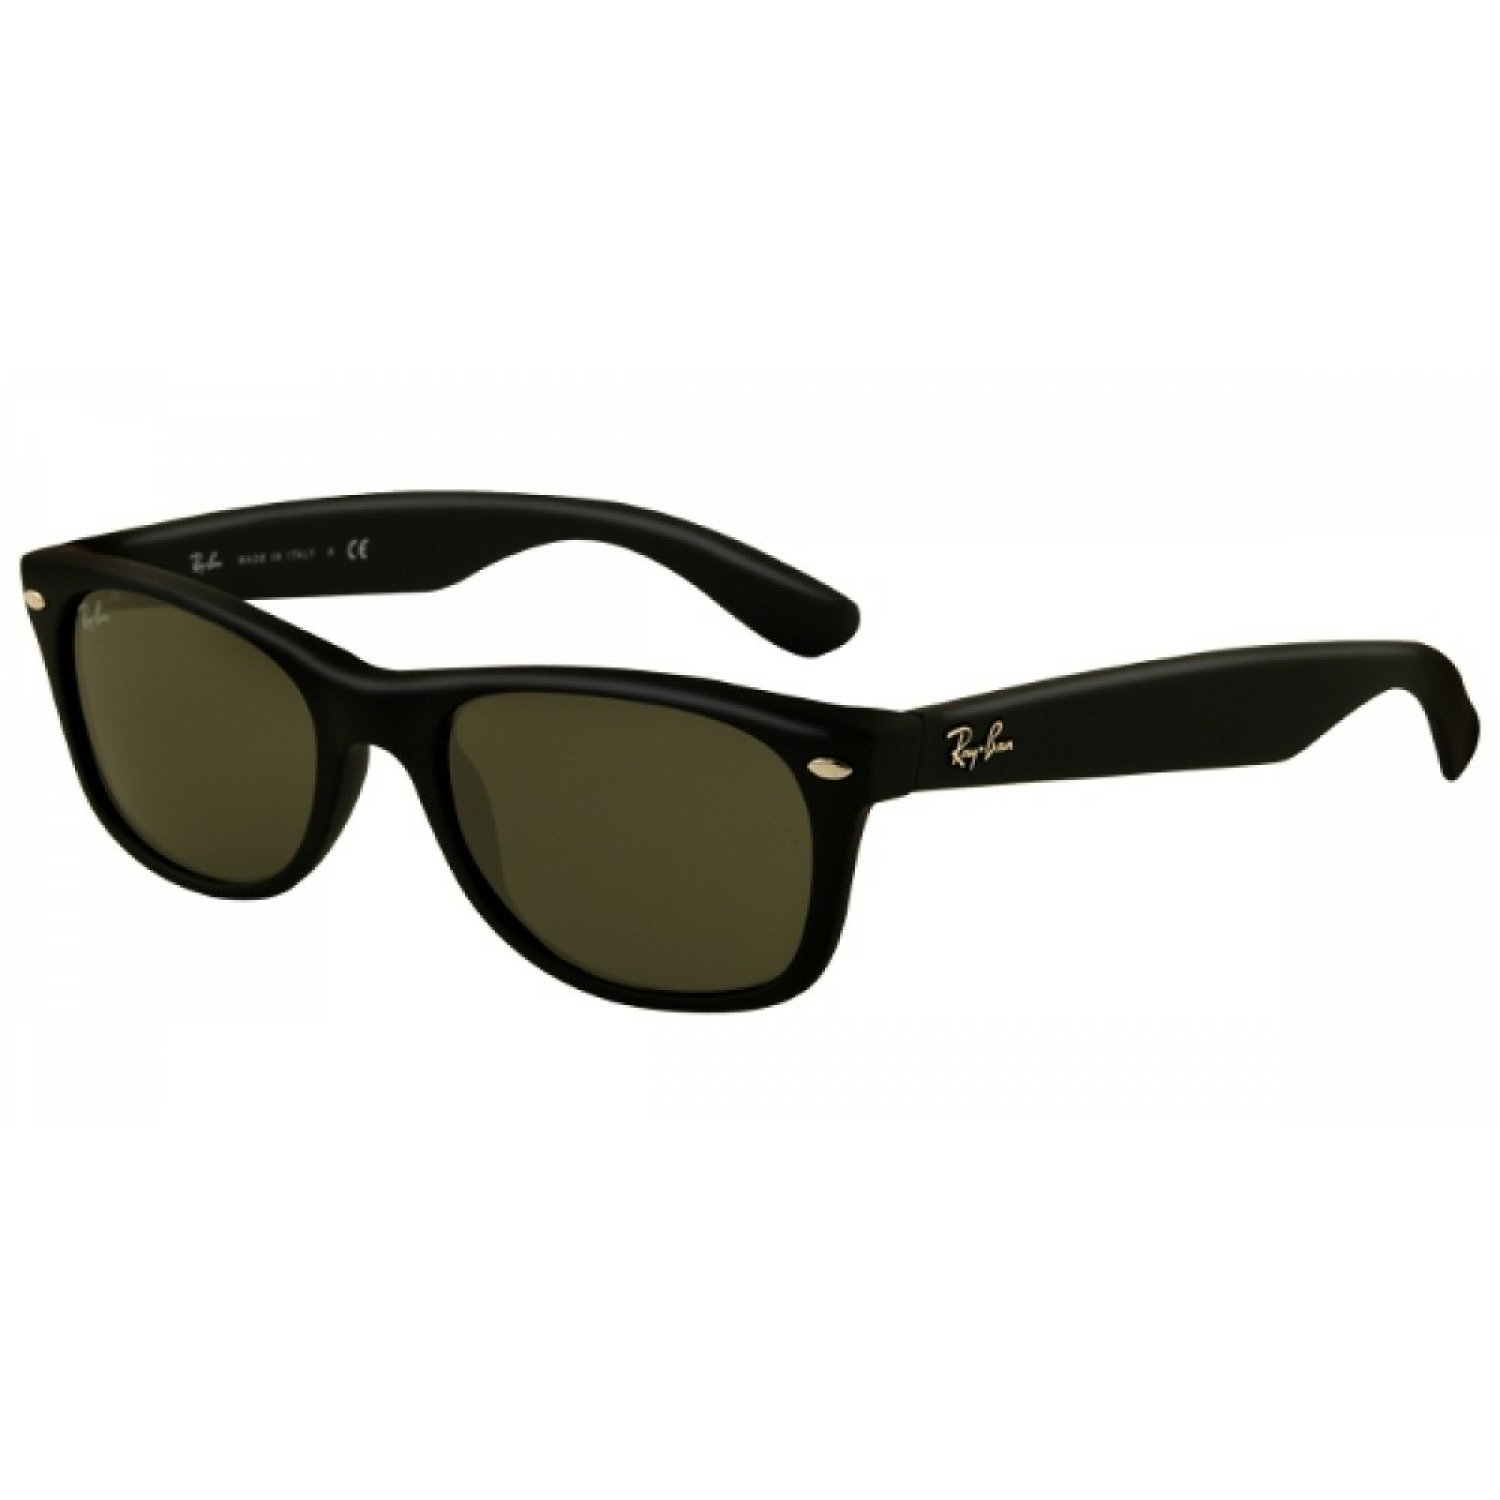 Ray-Ban Men's Anti-reflective New Wayfarer RB2132-622-52 Black Oval Sunglasses